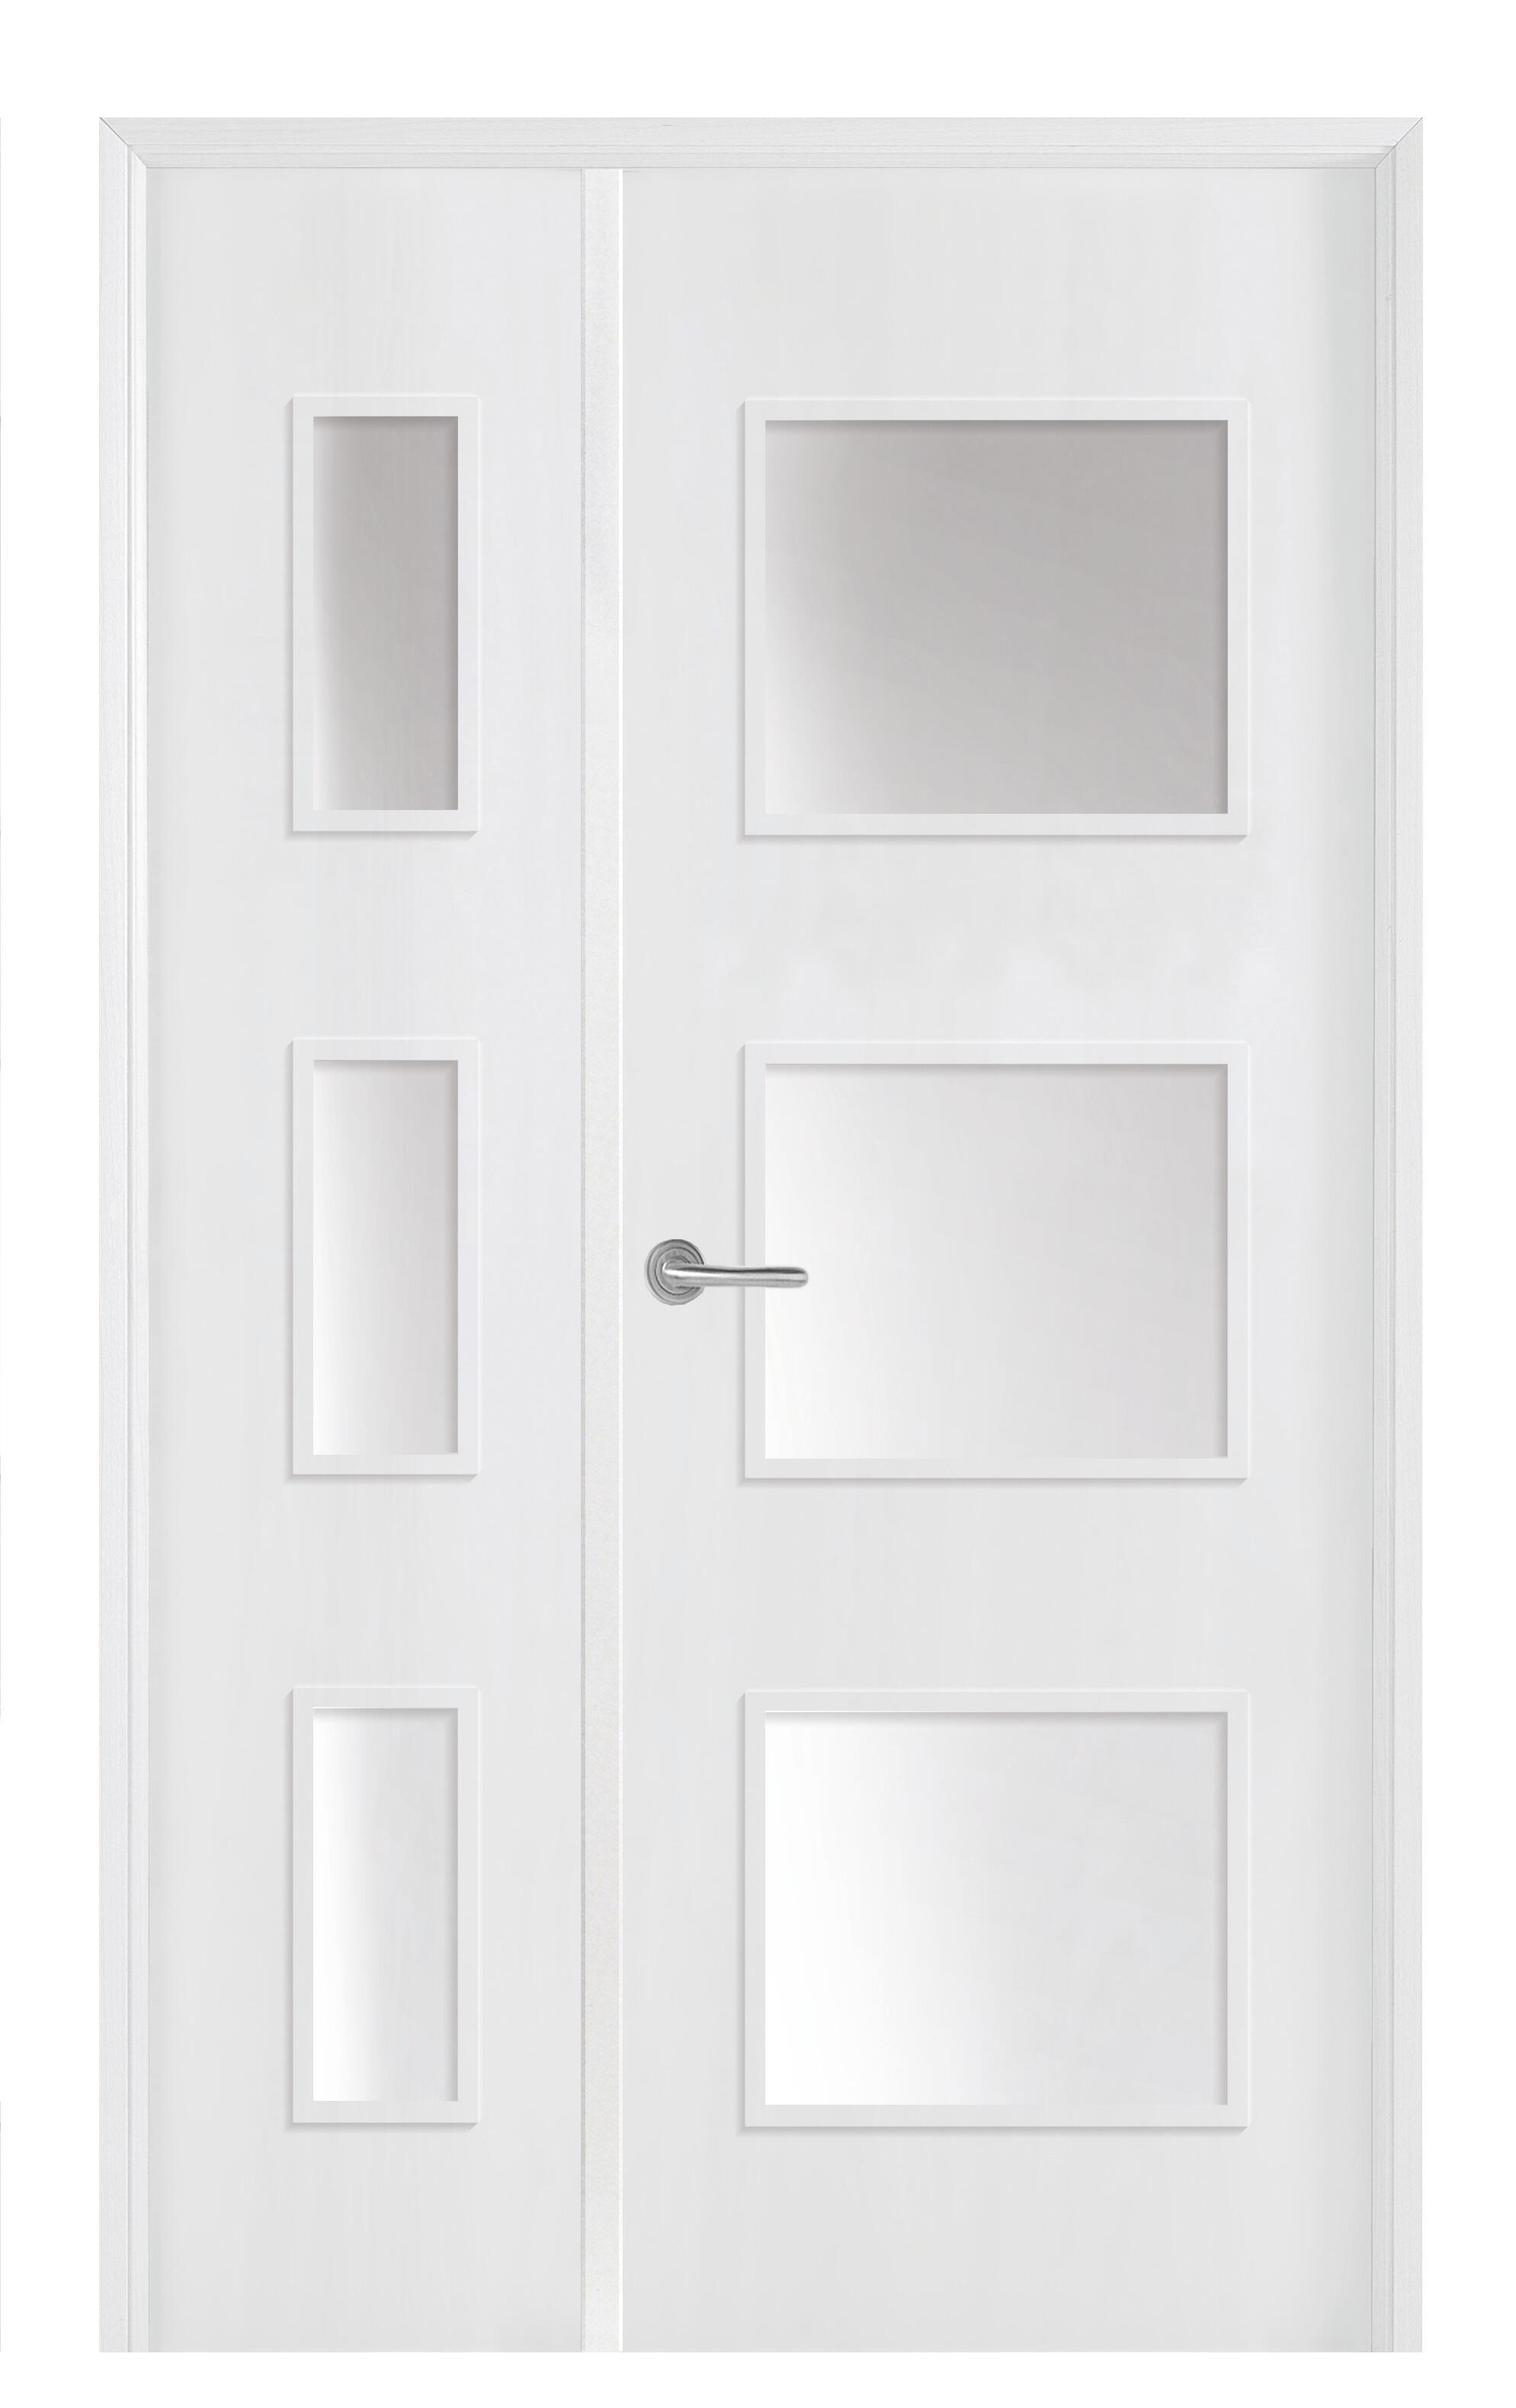 Puerta doble con cristal bari plus blanca 7x2x125cm d